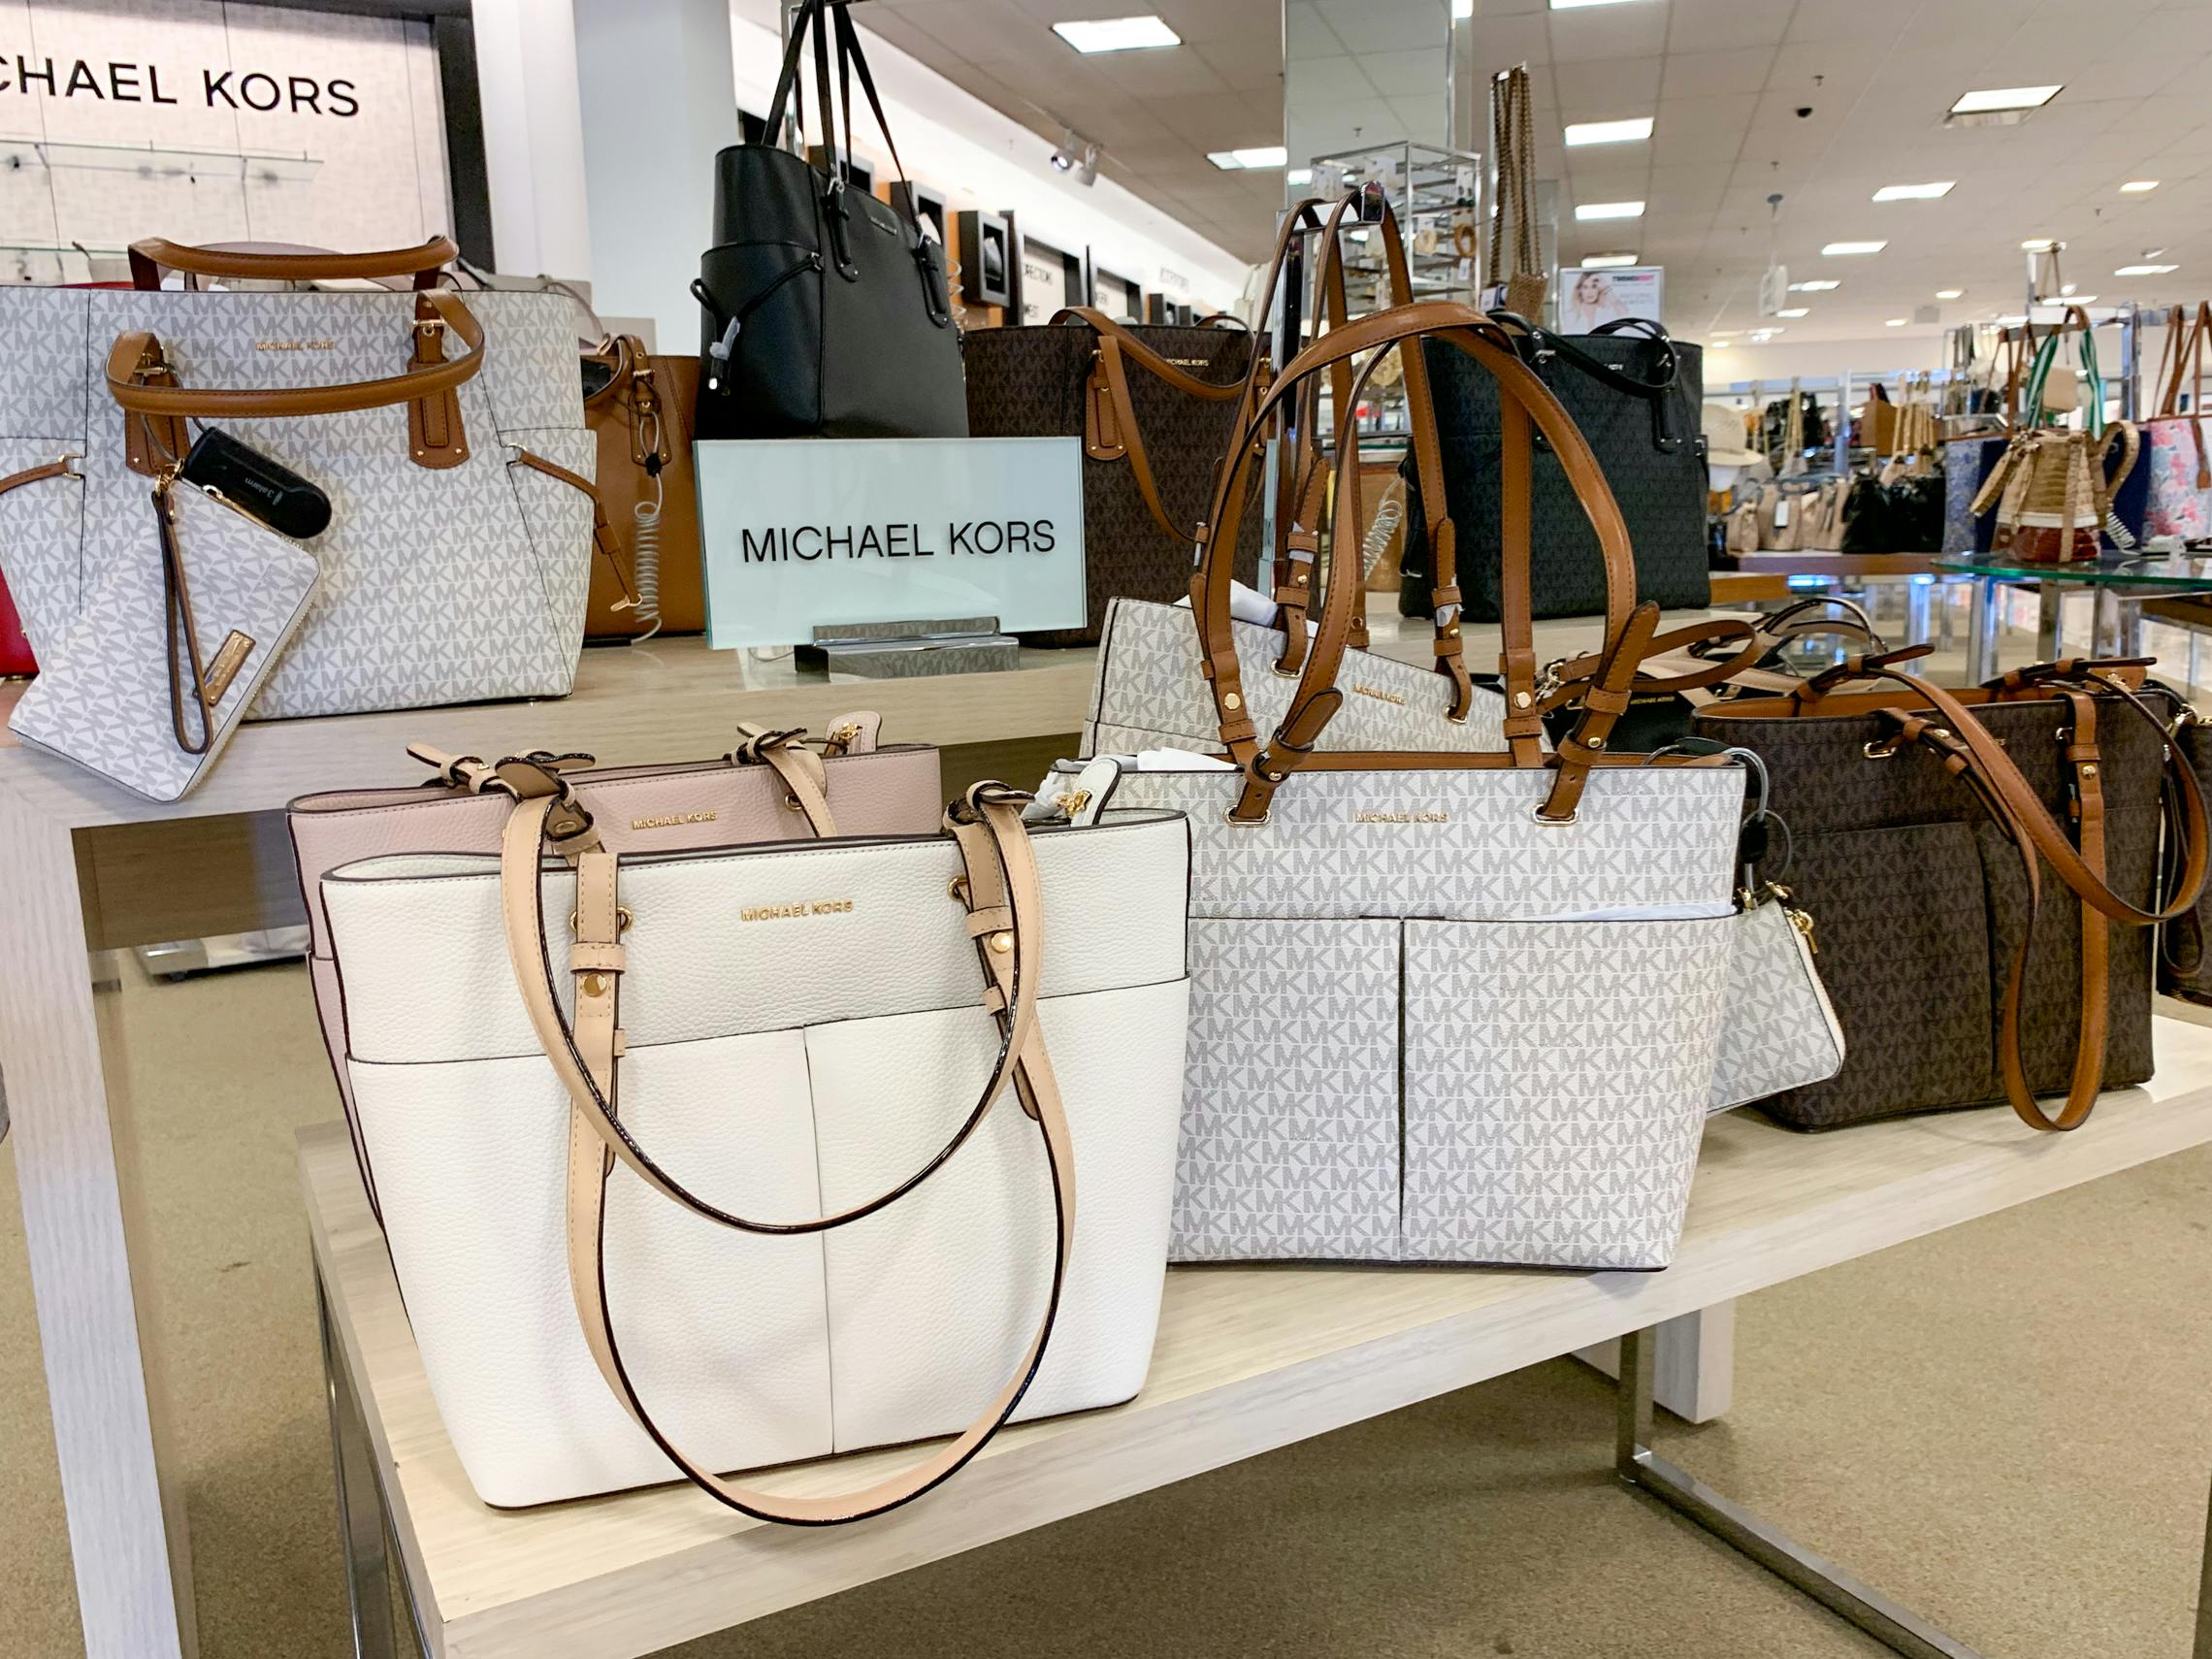 Michael Kors on sale up to 80% off at Belk Department Store | Handbags |  Wallet - YouTube